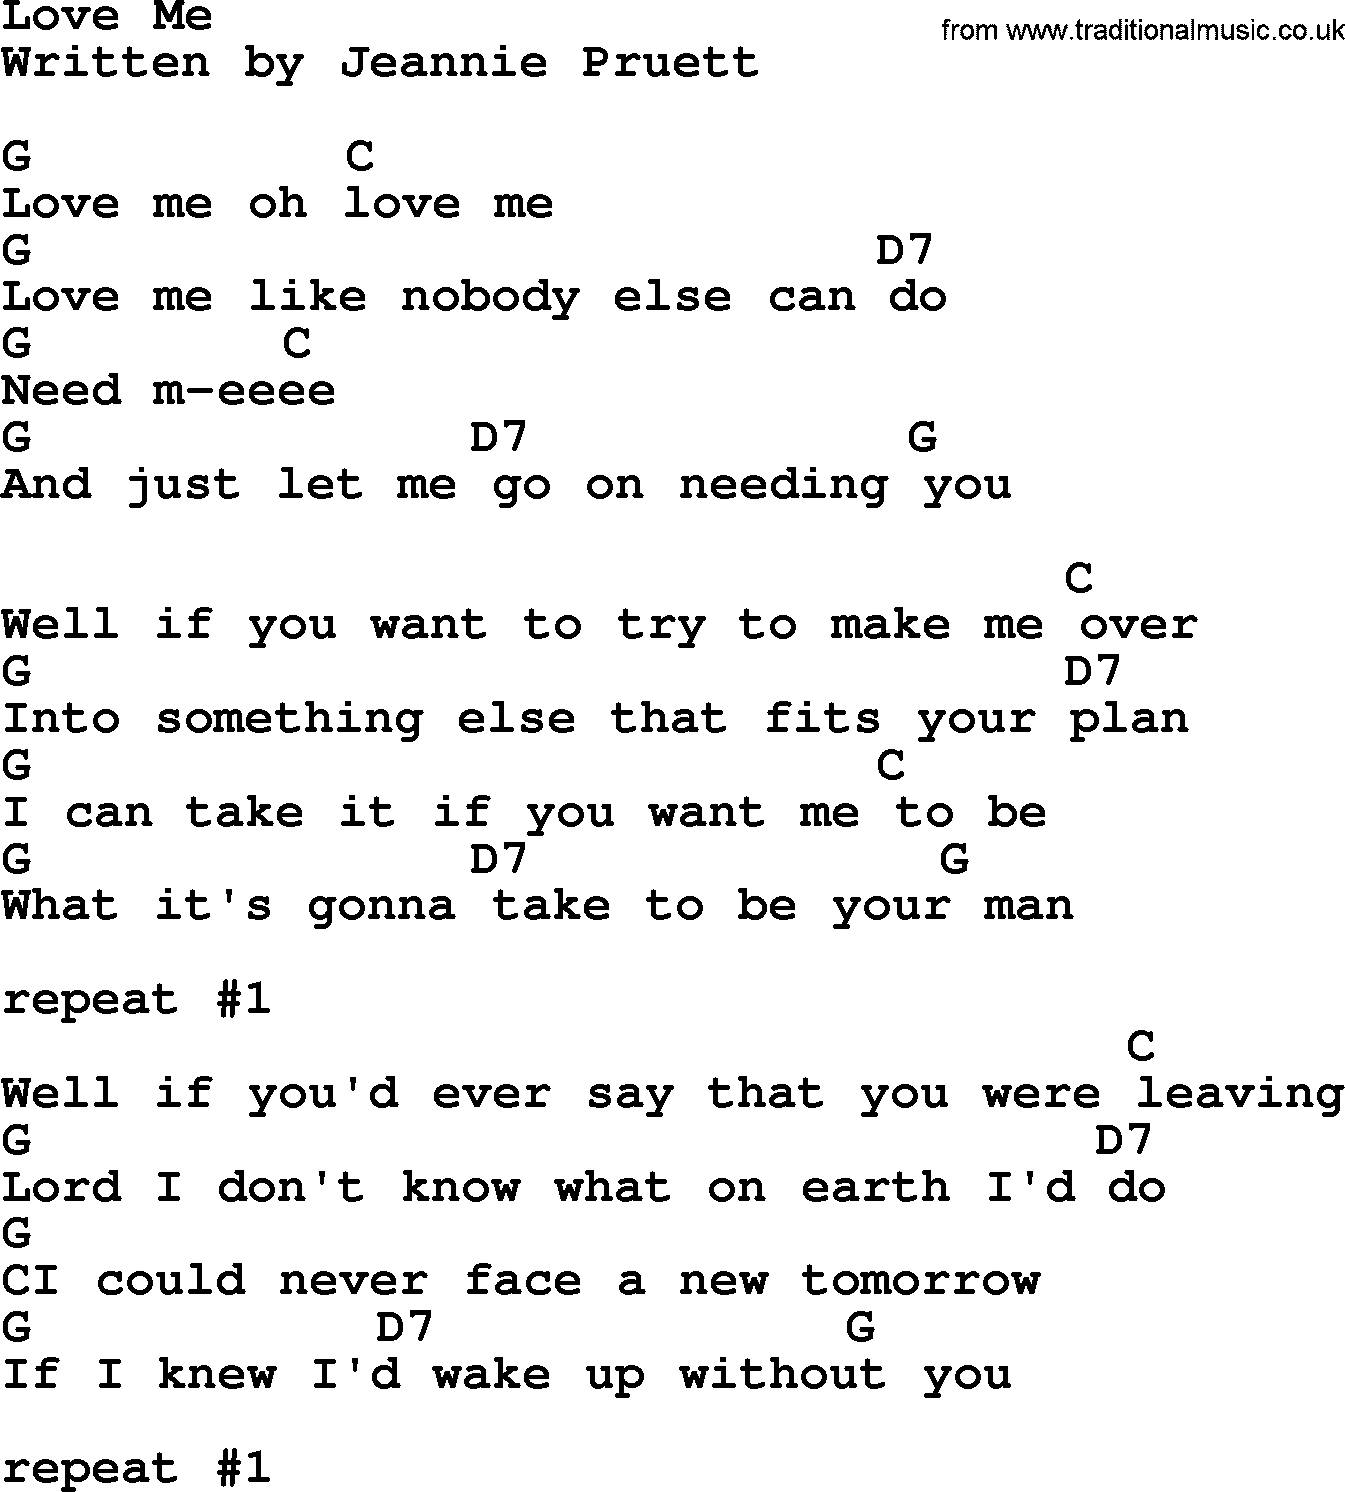 Marty Robbins song: Love Me, lyrics and chords